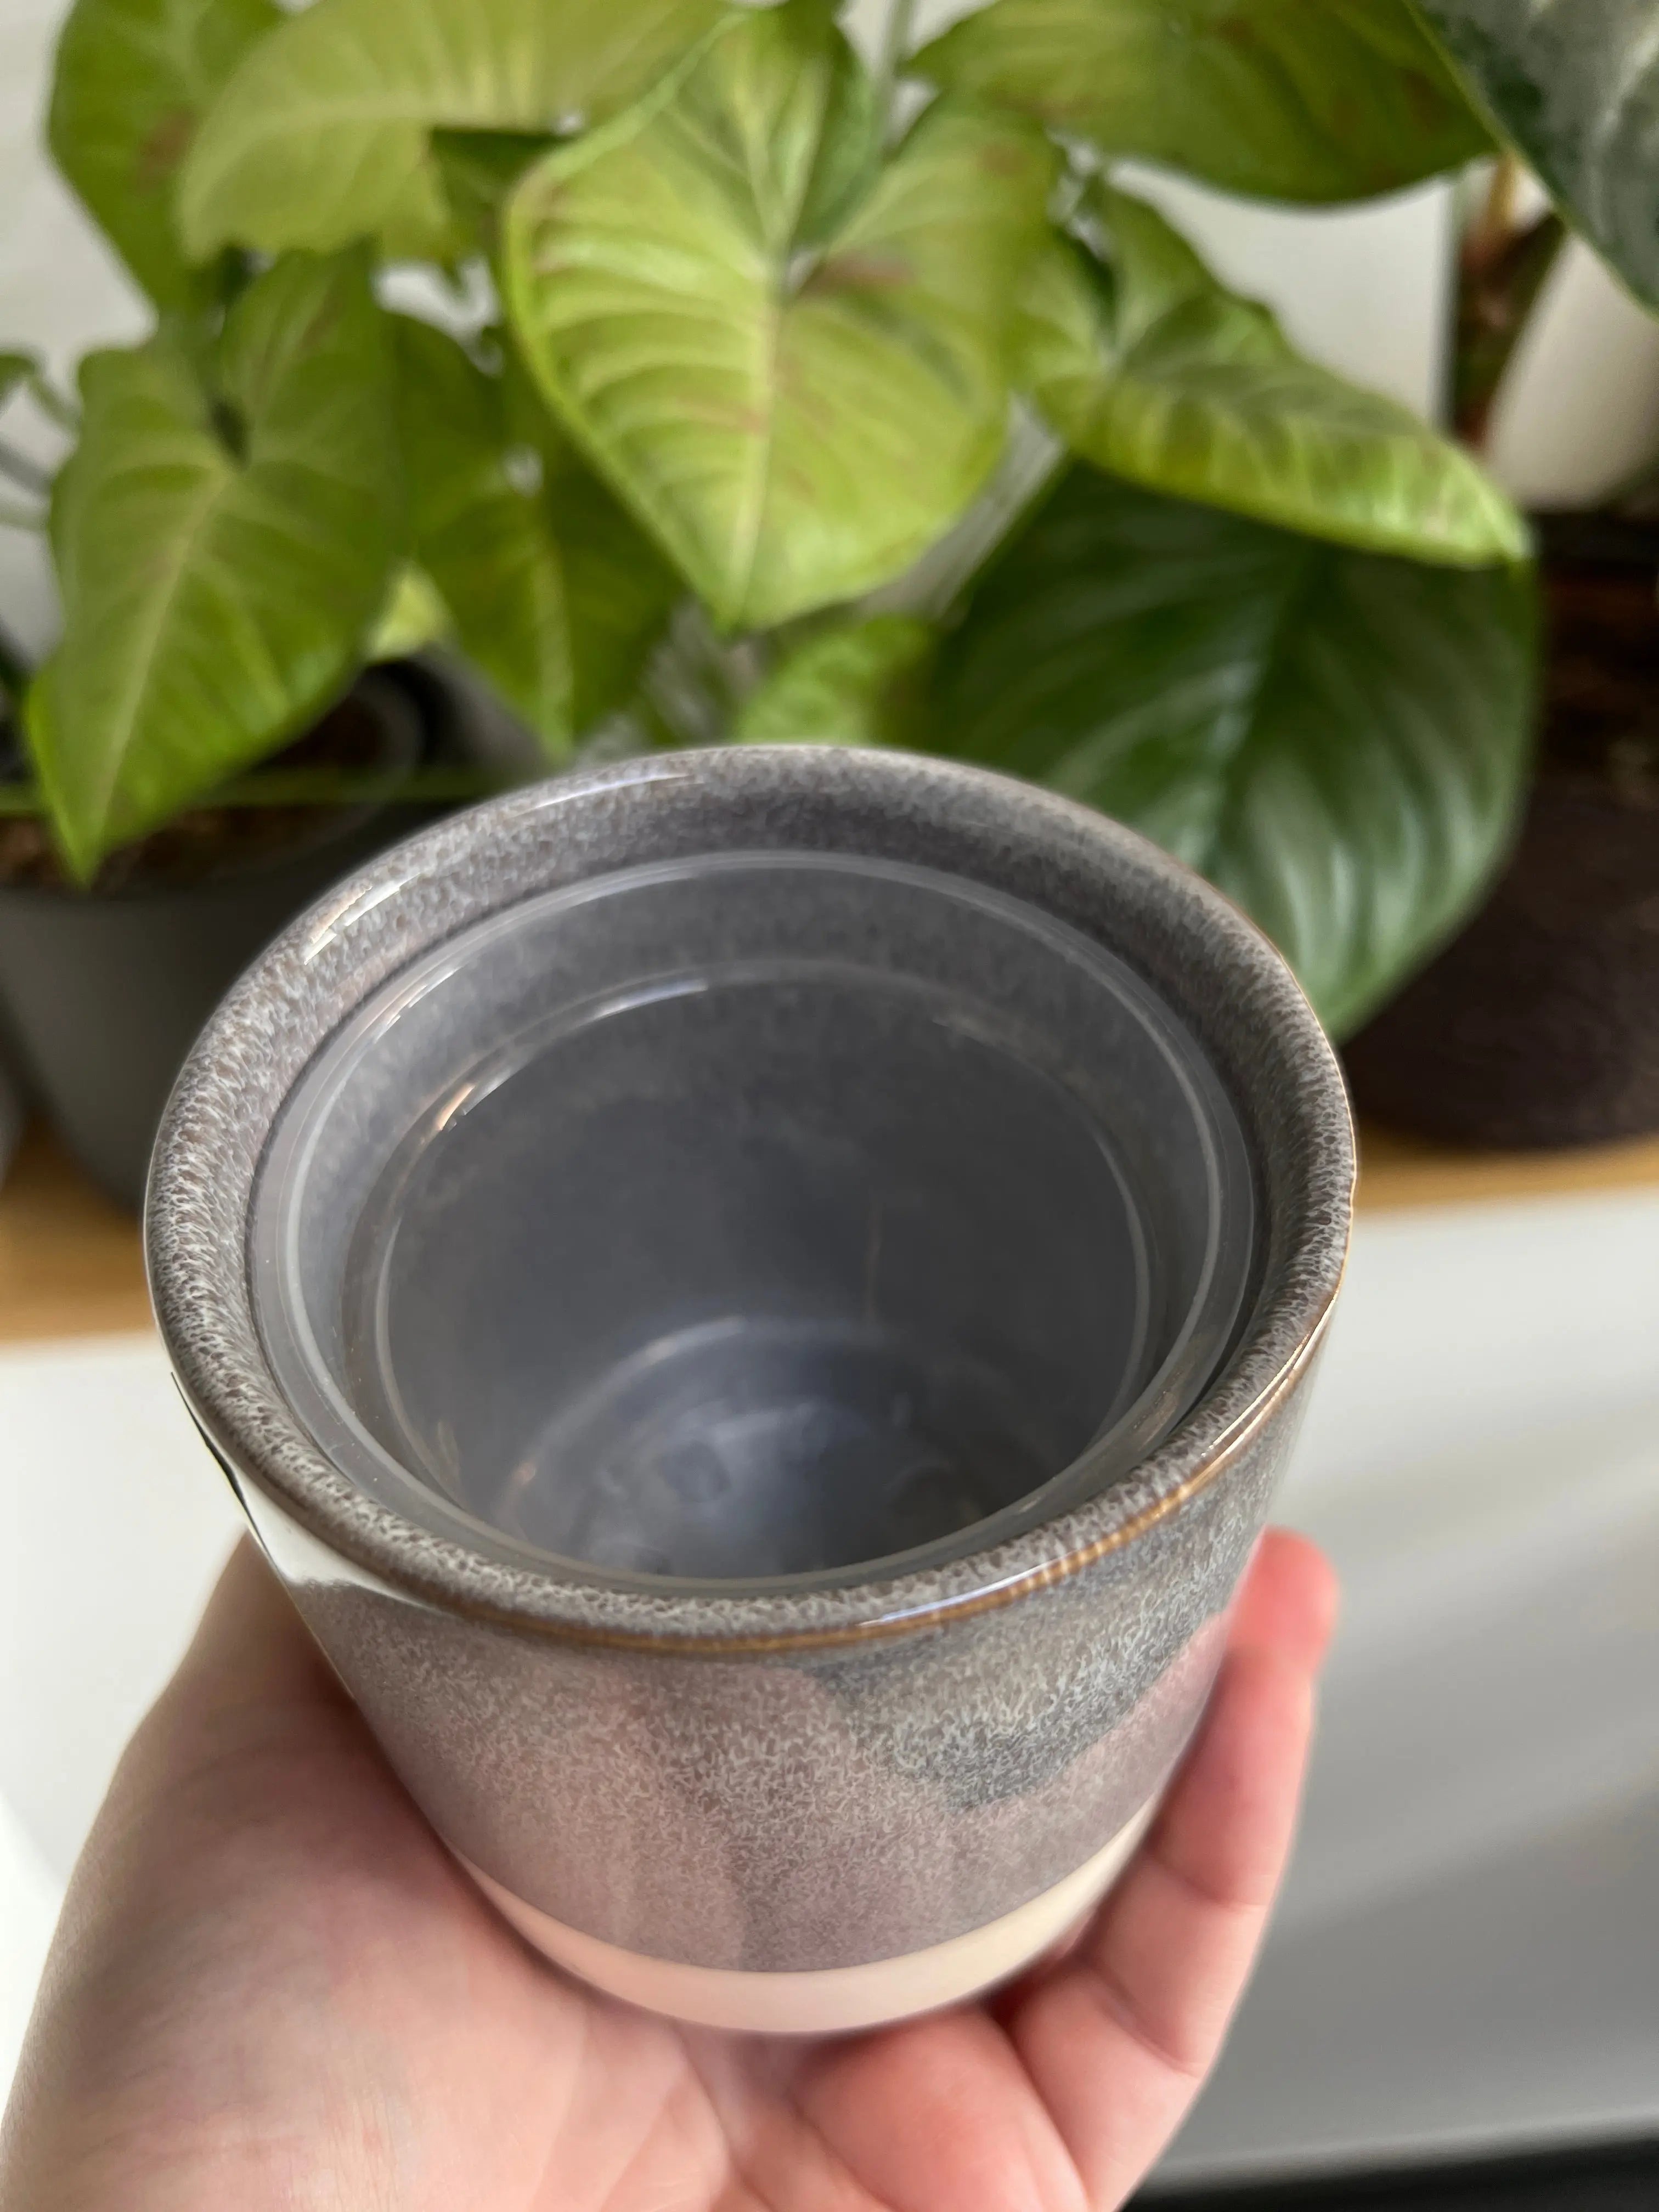 Duotone Plant Pot - Gray and Natural - D8 - SMUKHI